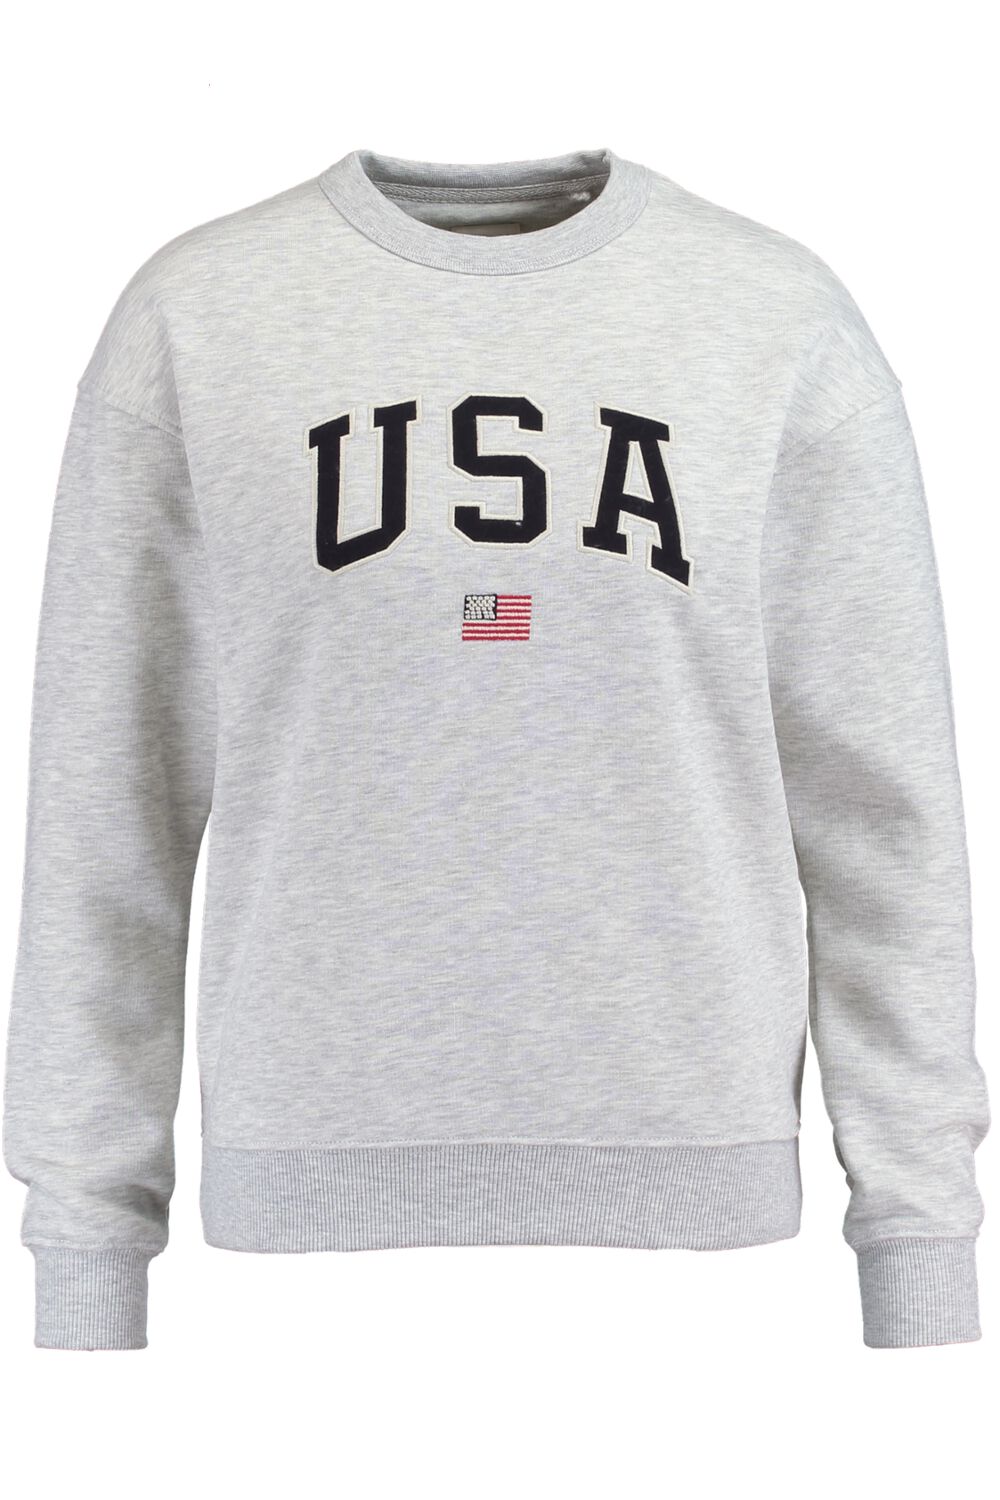 America Today Dames Sweater Soel Grijs product